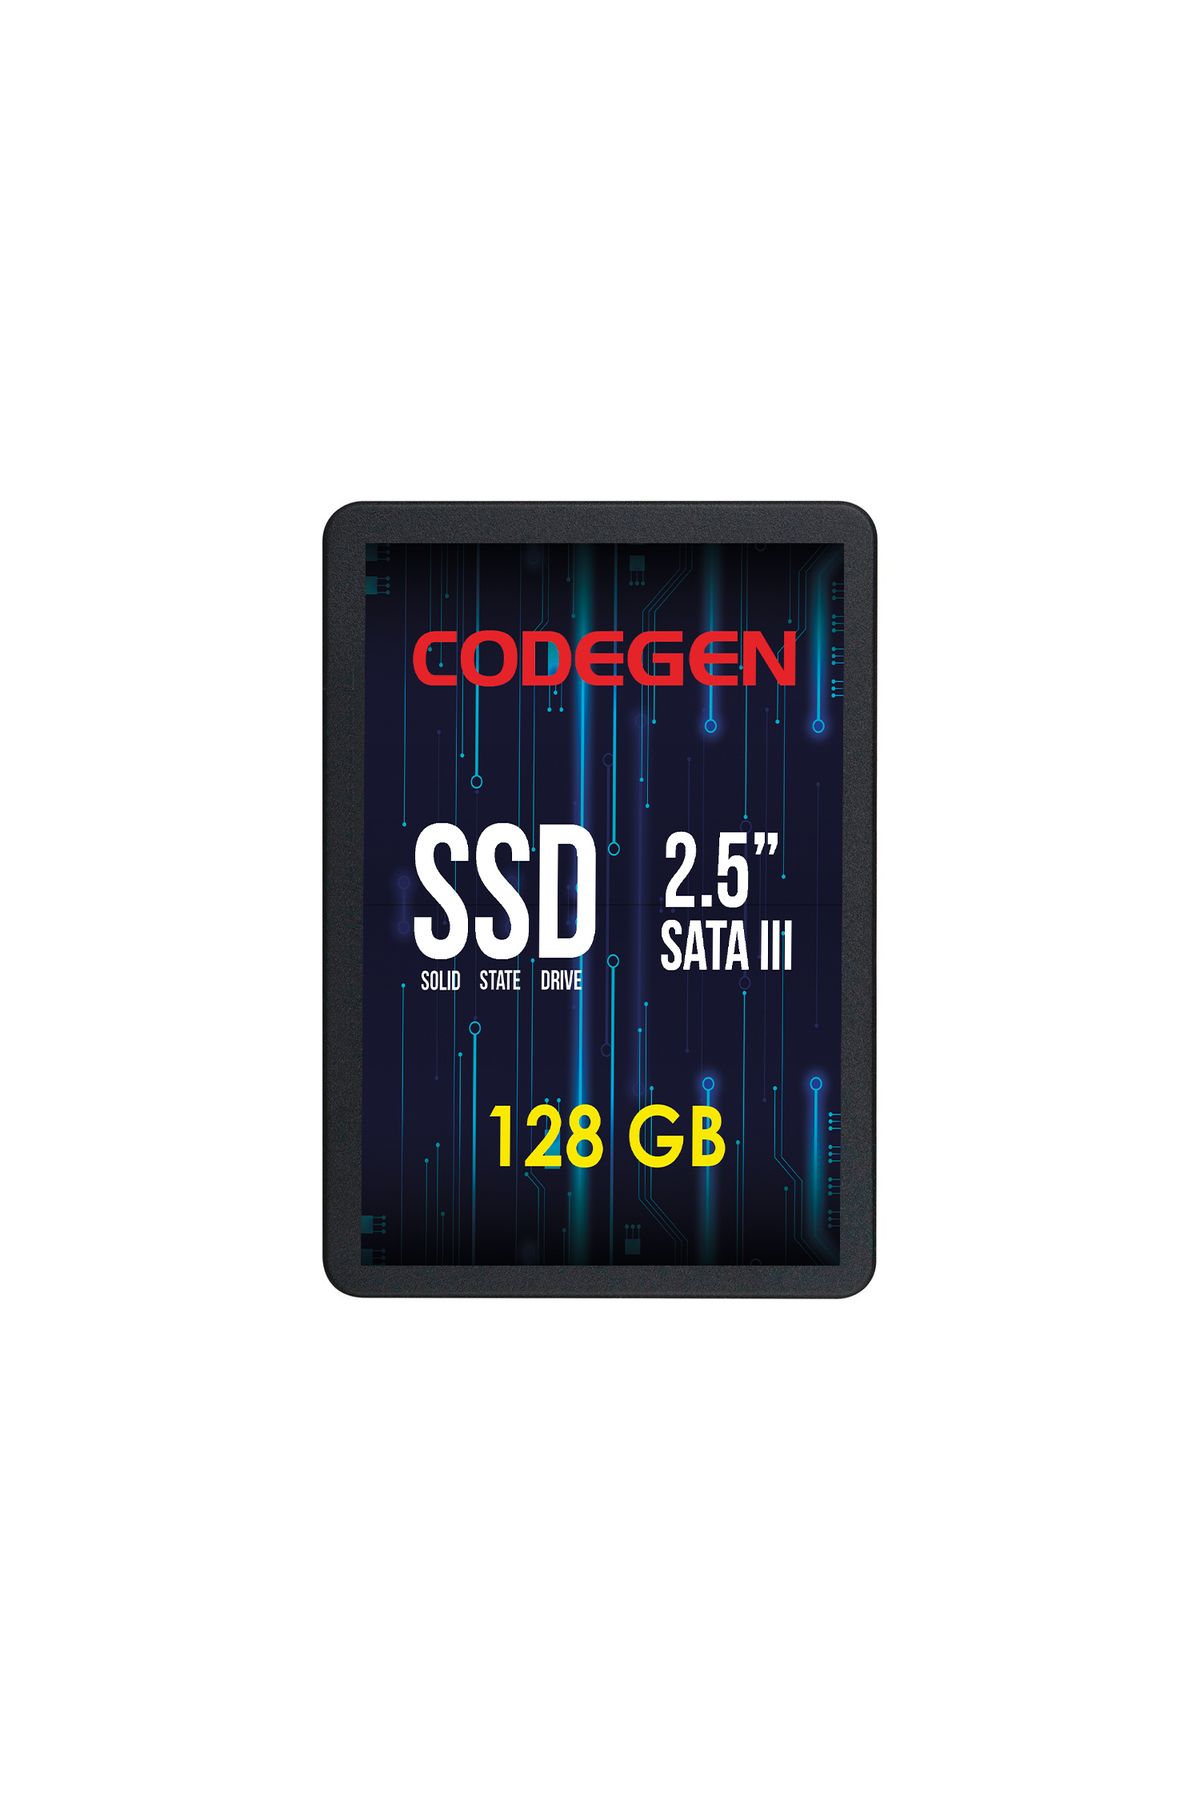 CODEGEN Cdg-128gb-ssd25 2.5" 128gb 500/350mb/s Sata Ssd Disk